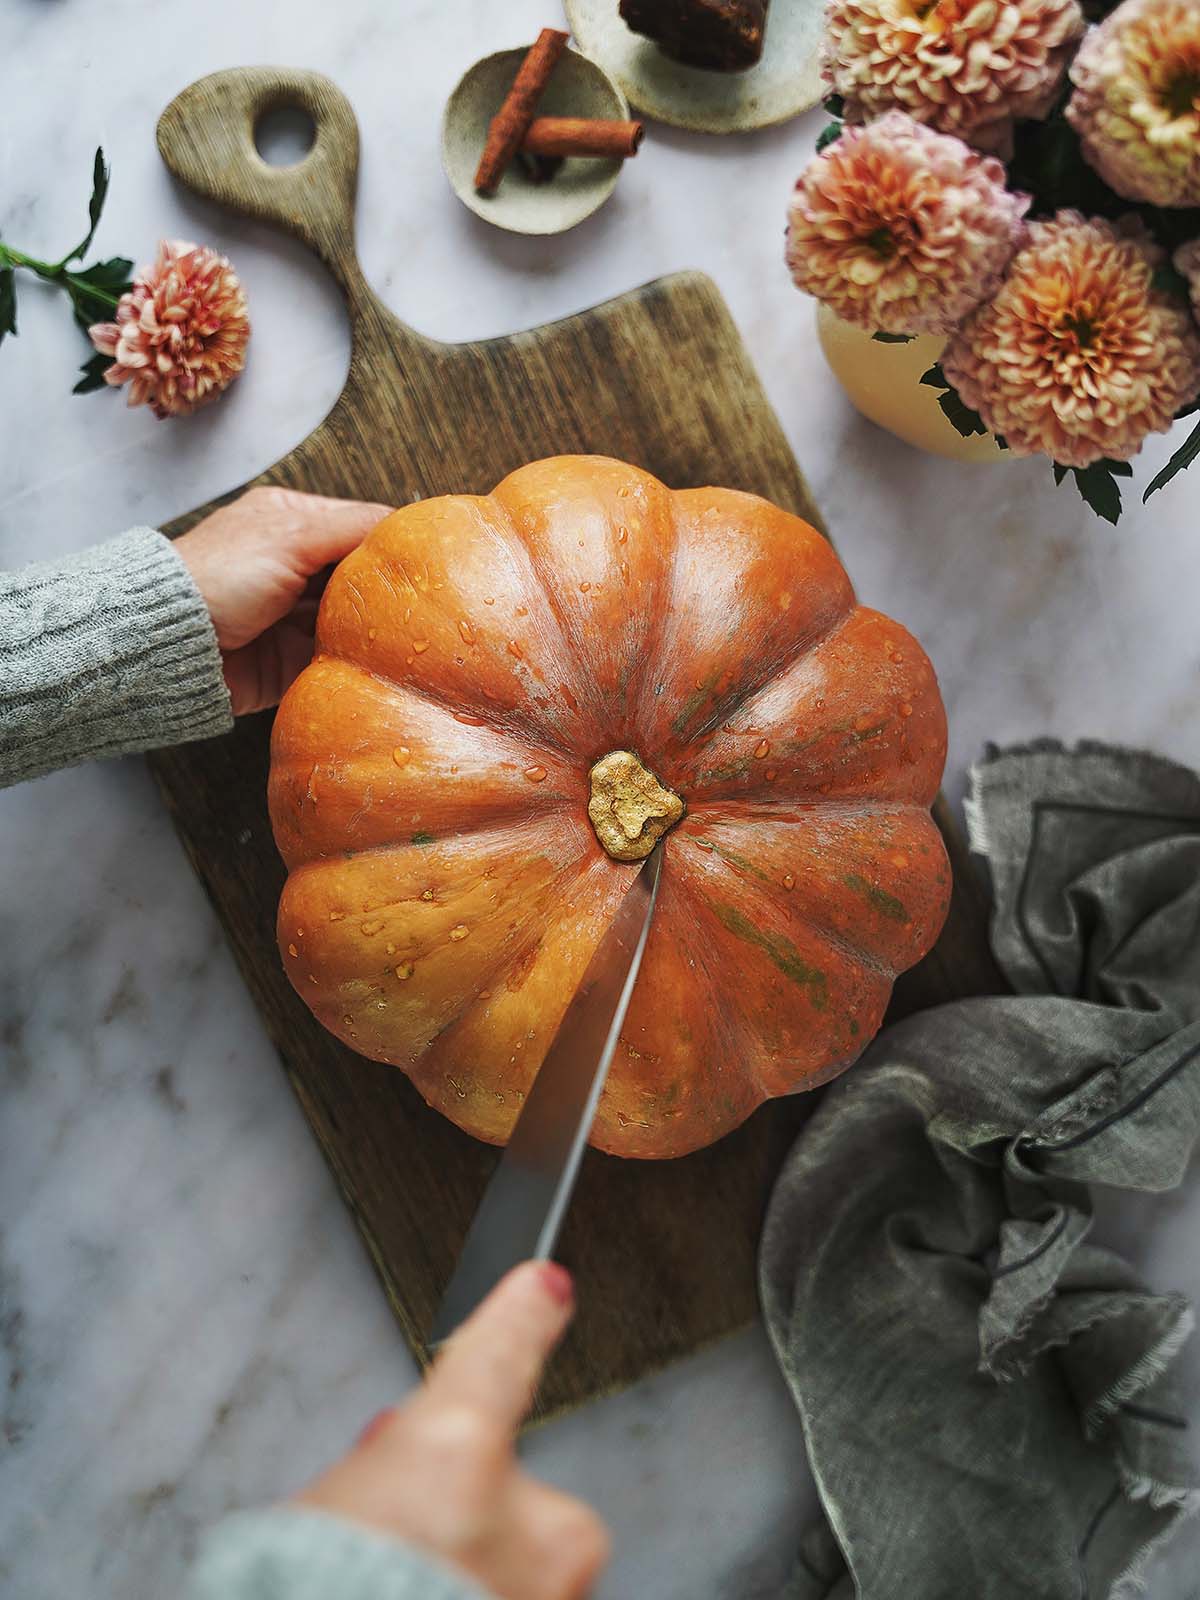 Cutting a pumpkin with a knife.